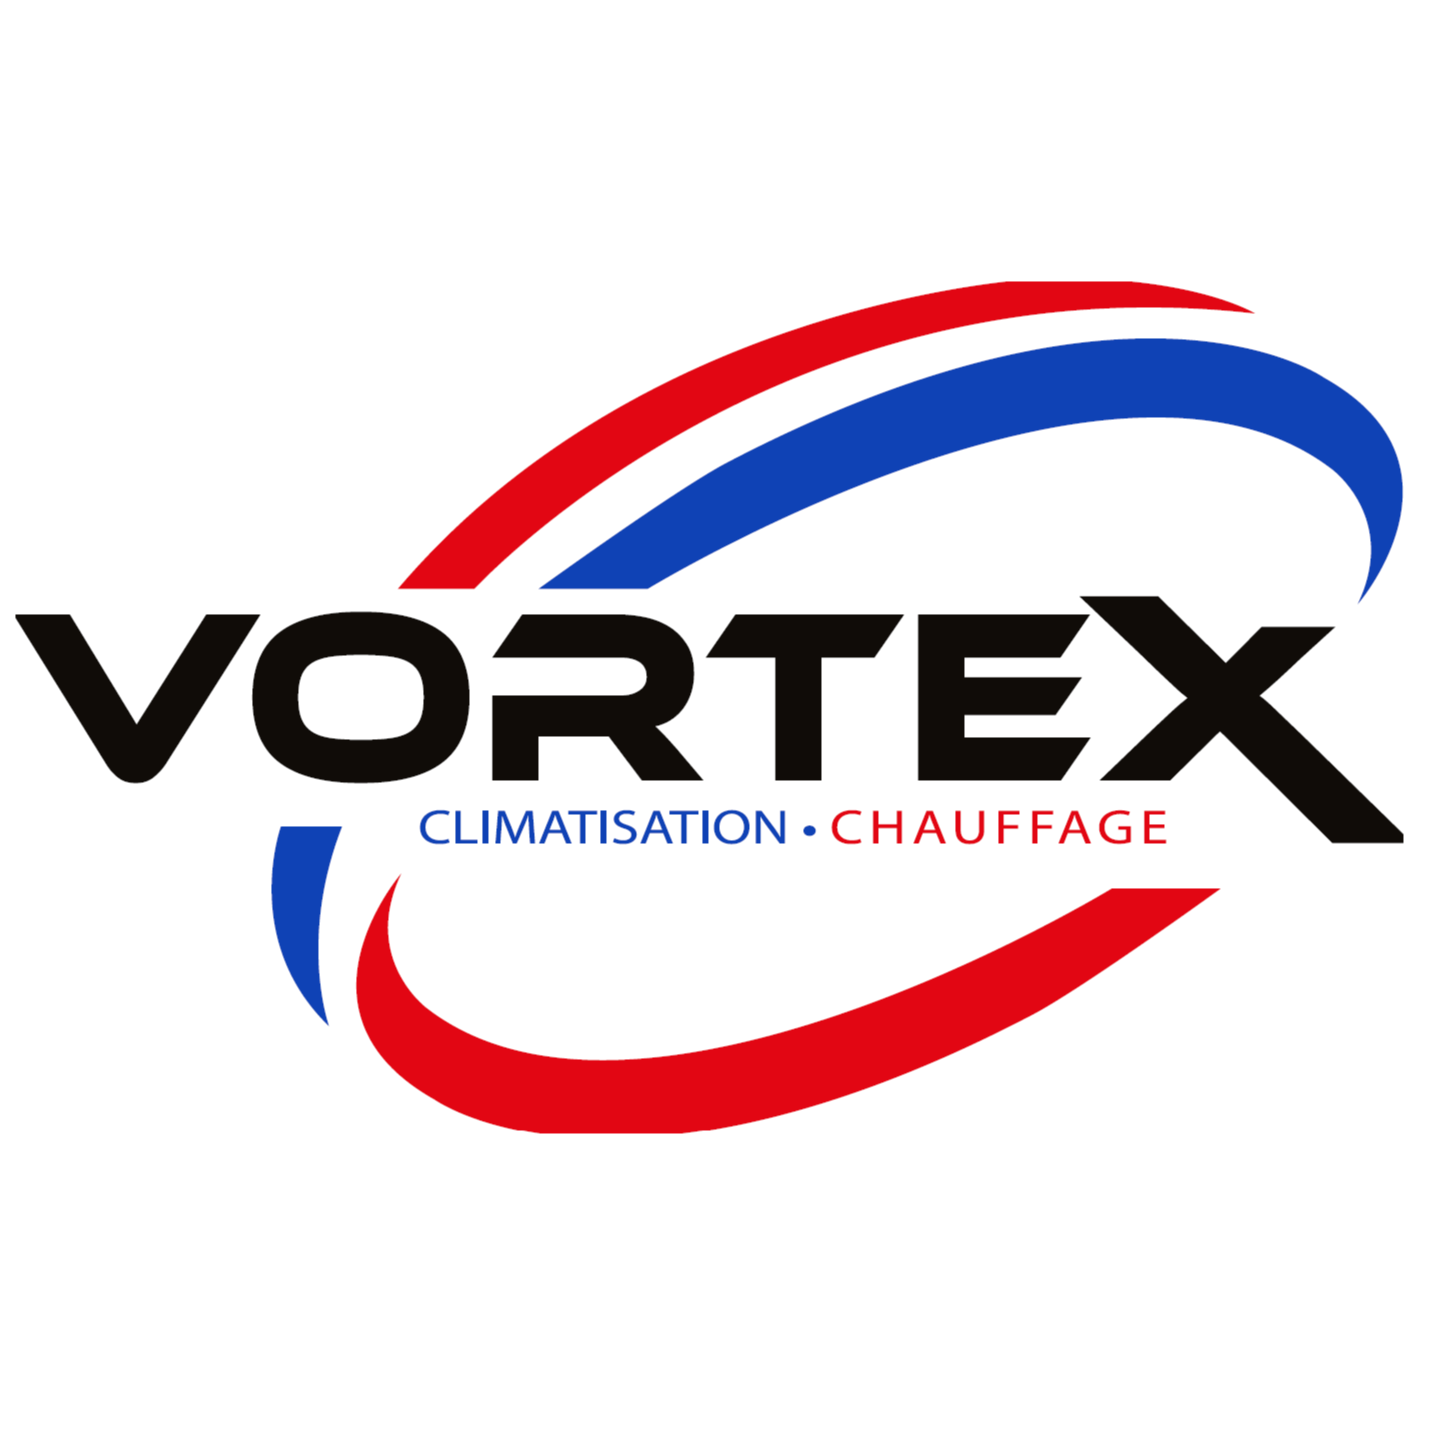 Vortex Climatisation - Installation Chauffage, Thermopompe, Air climatisé, Climatiseur